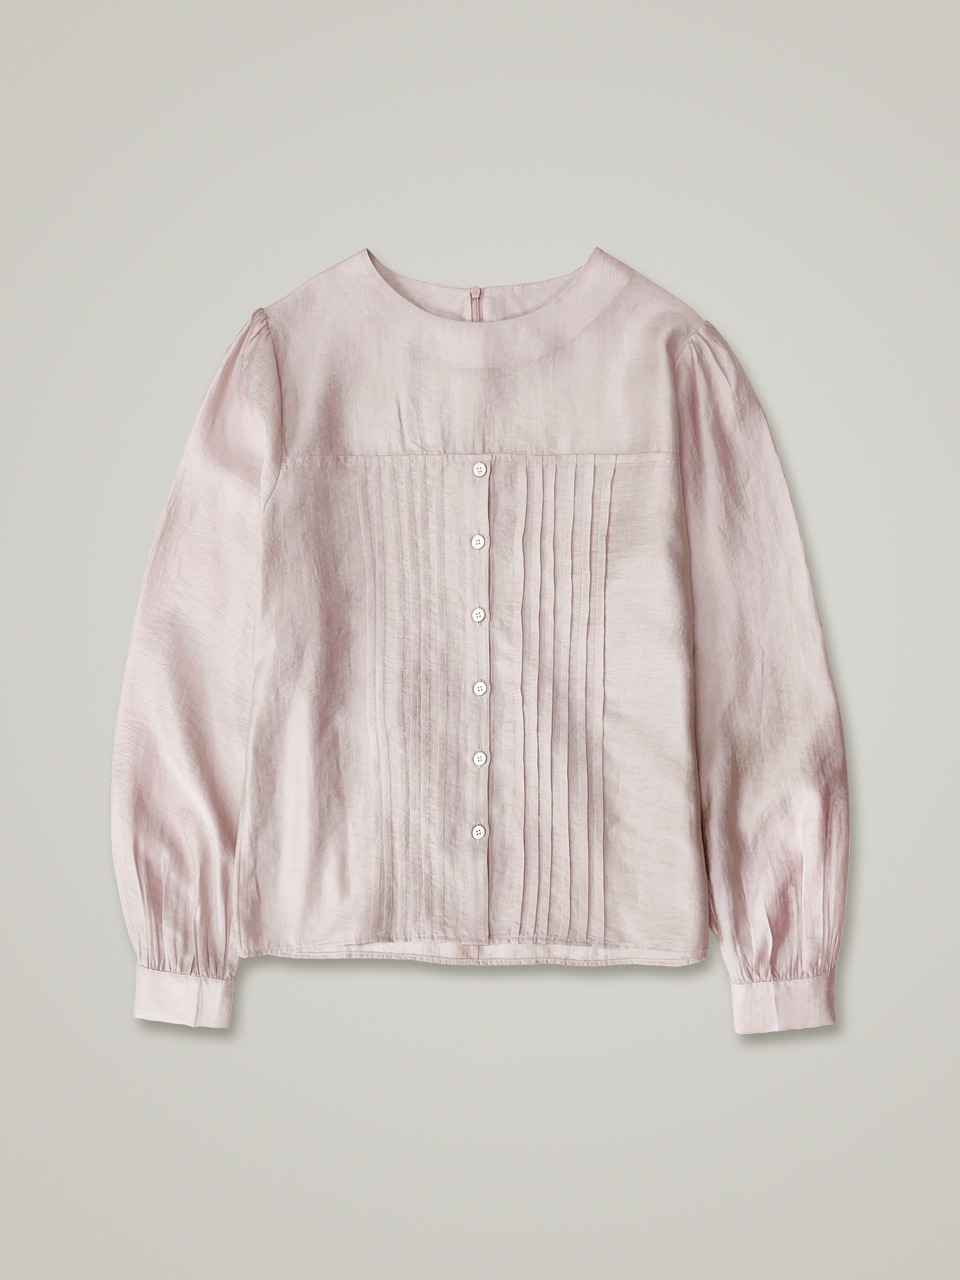 comos 813 half open pin-tuck blouse (pink)